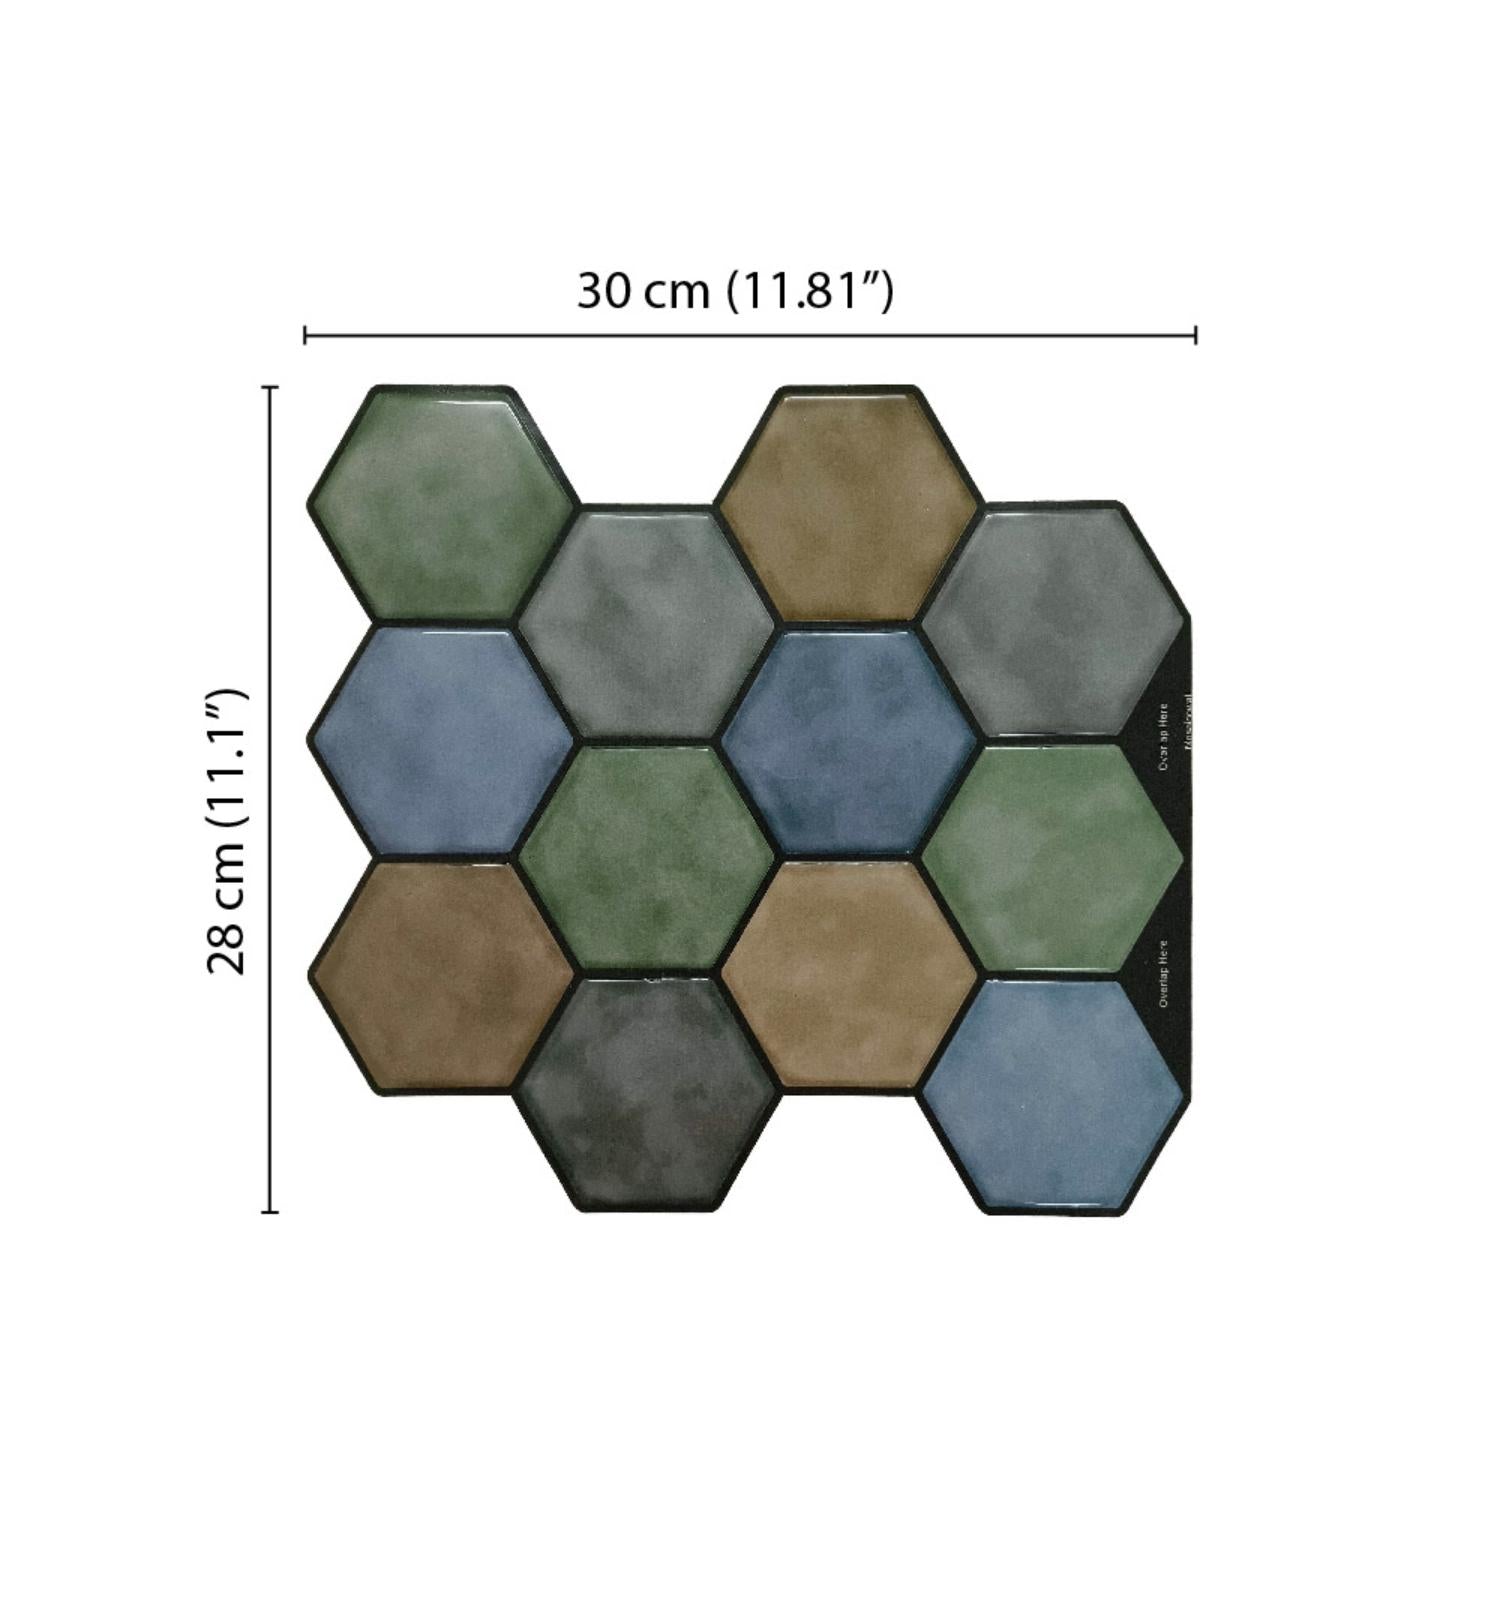 Multicolor peel and Stick Wall Tile | Hexagon Kitchen Backsplash Tiles | self Adhesive Tiles for Home Décor